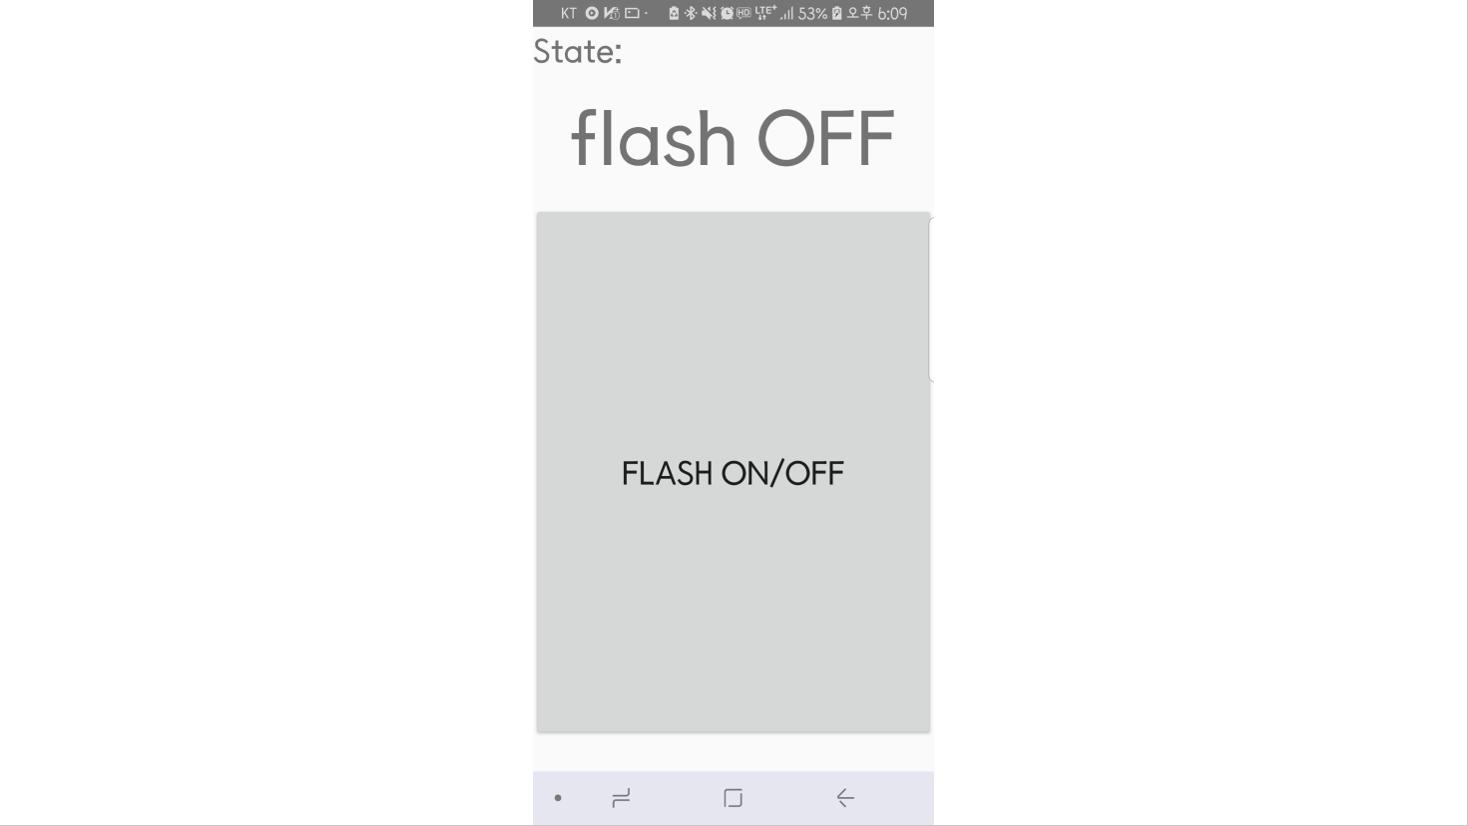 Just flash